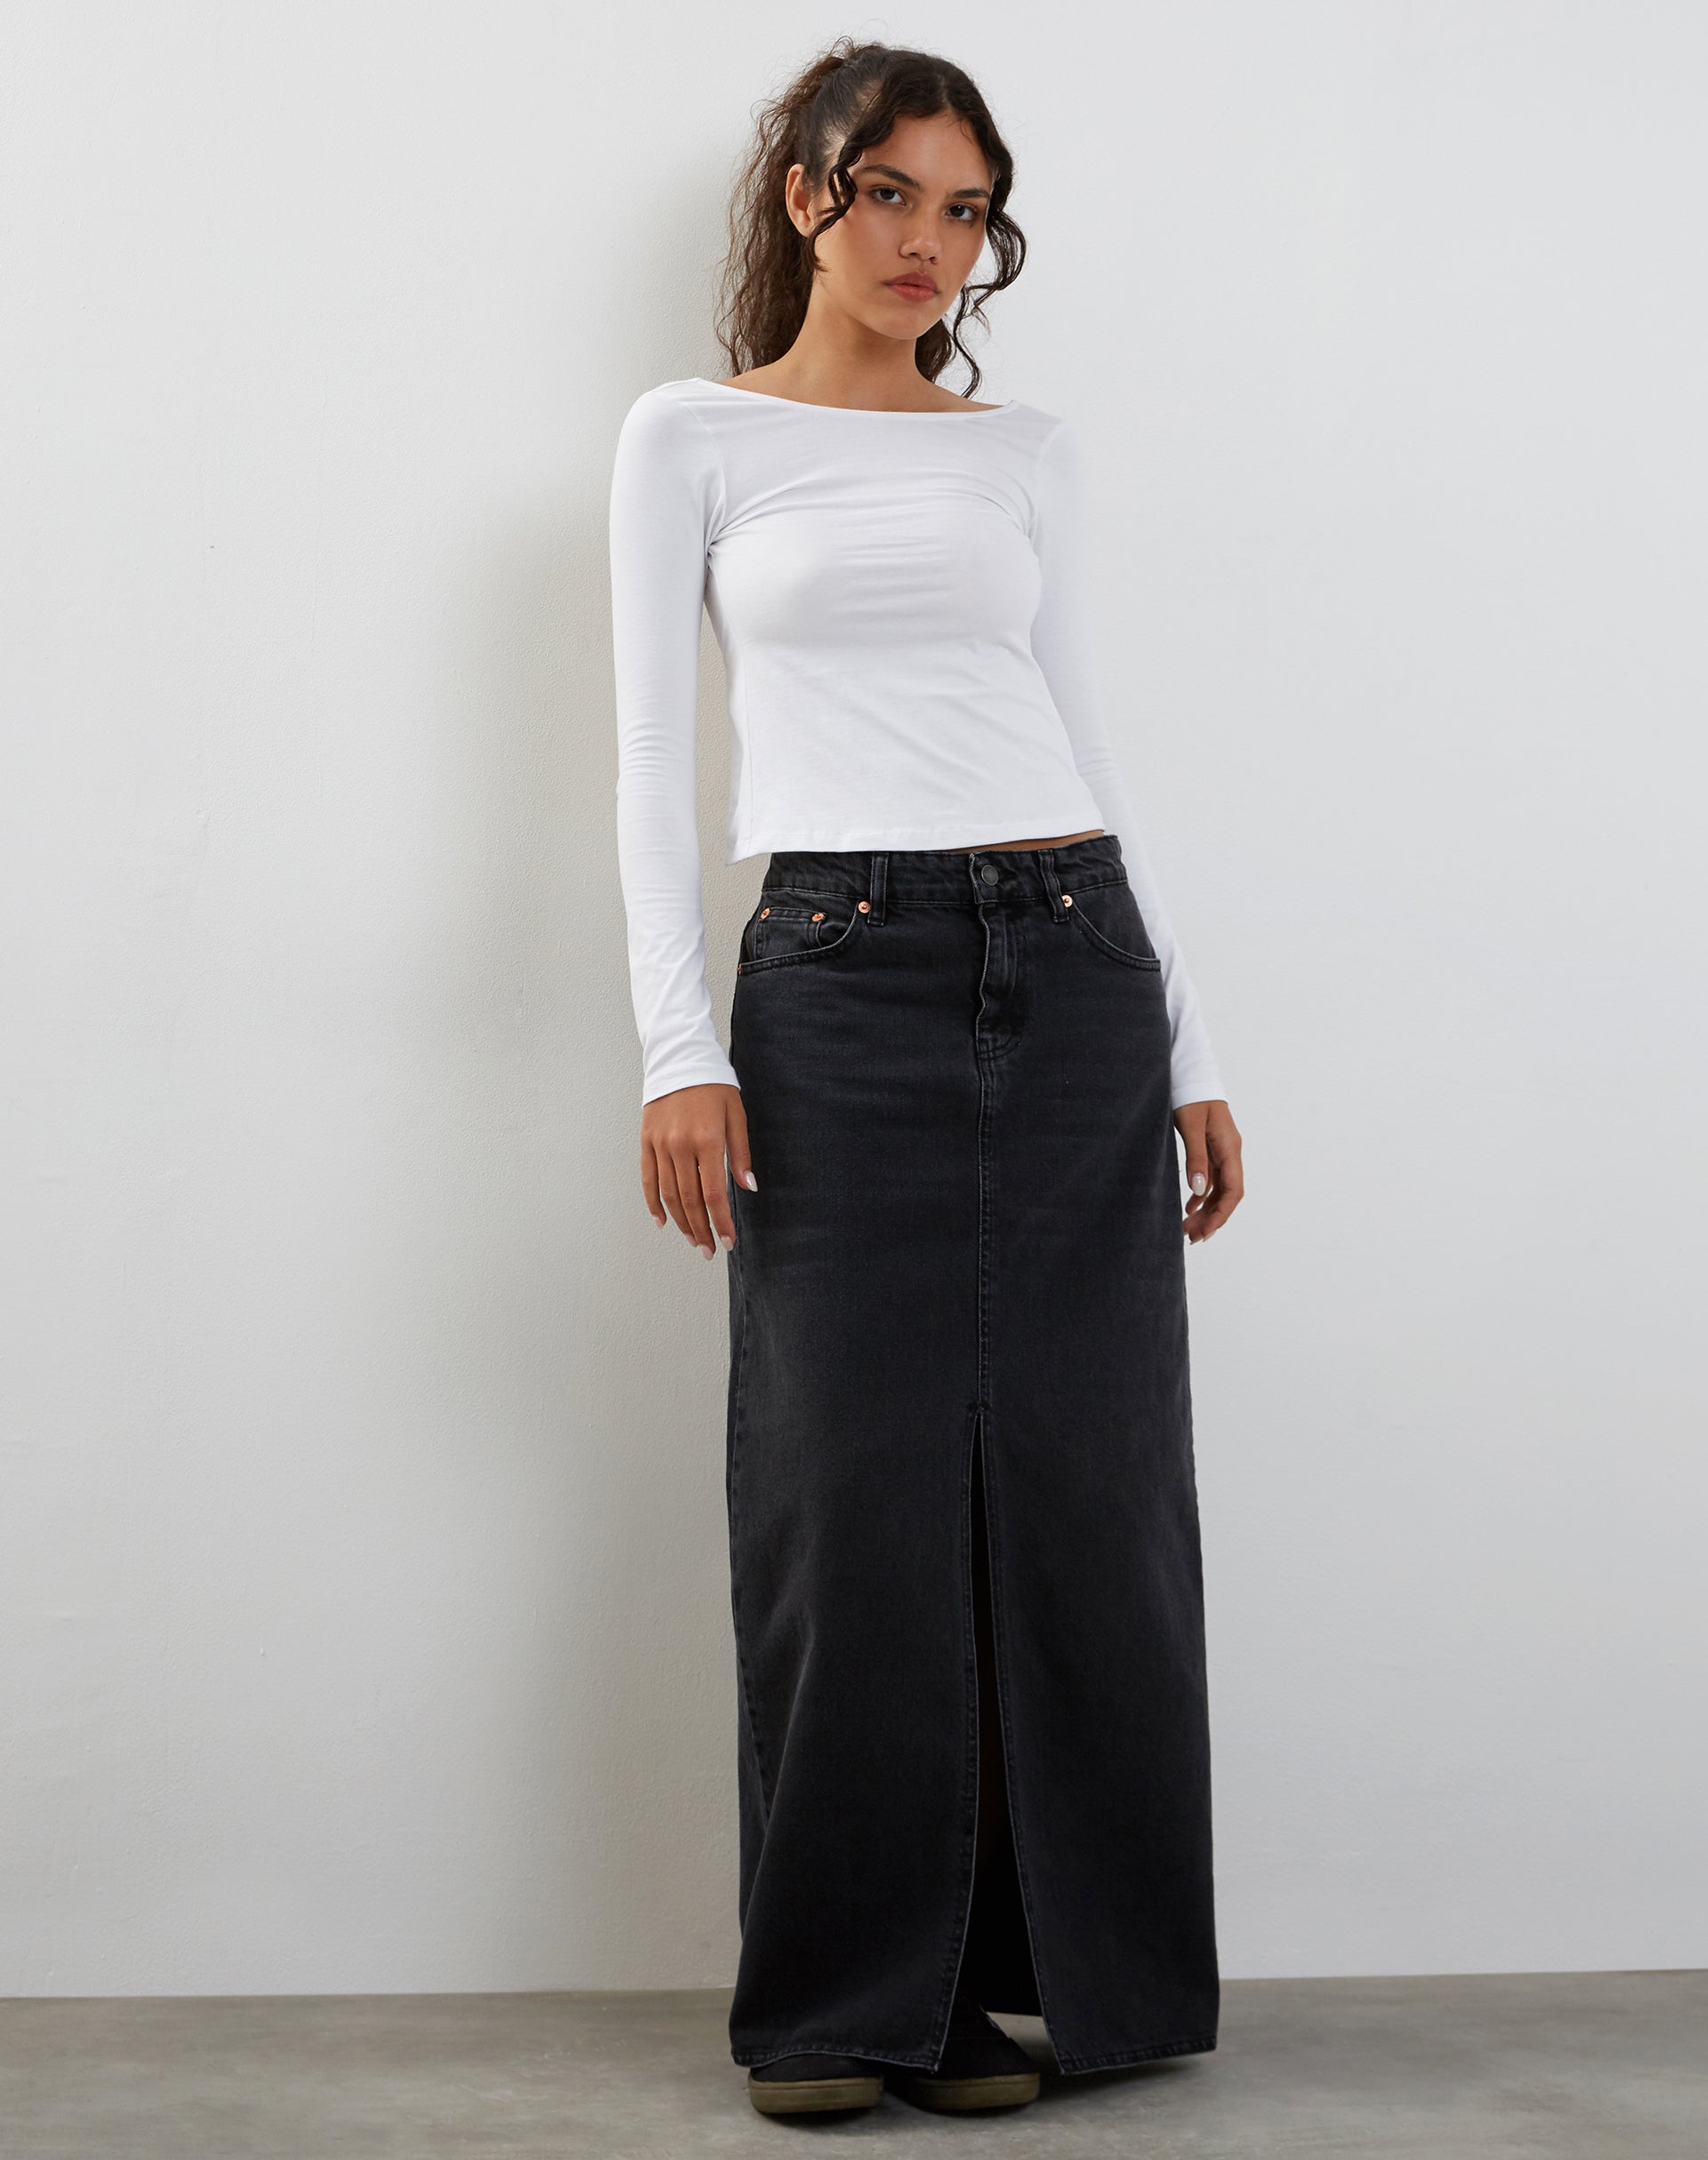 Image of Ansita Long Sleeve Top in White